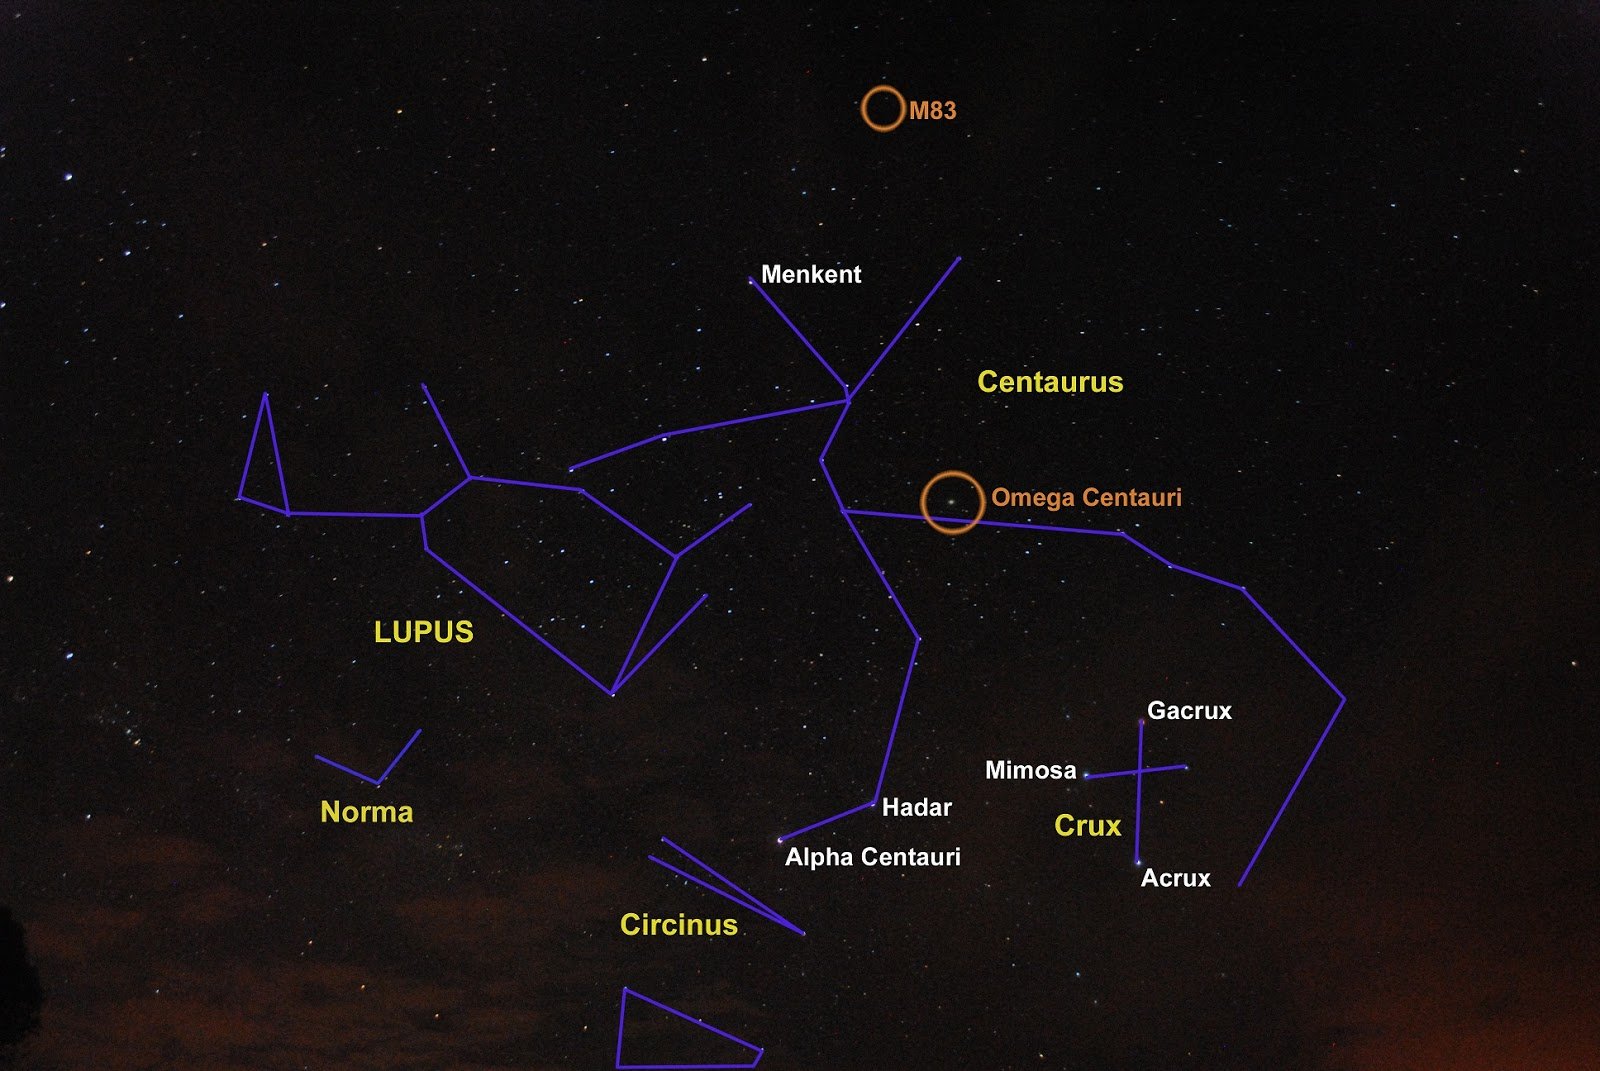 Название звезды на востоке. Звезда Проксима Центавра в созвездии. Альфа Центавра Созвездие на небе. Альфа Центавра звезда в созвездии на небе. Созвездие Центавра на карте звездного неба.